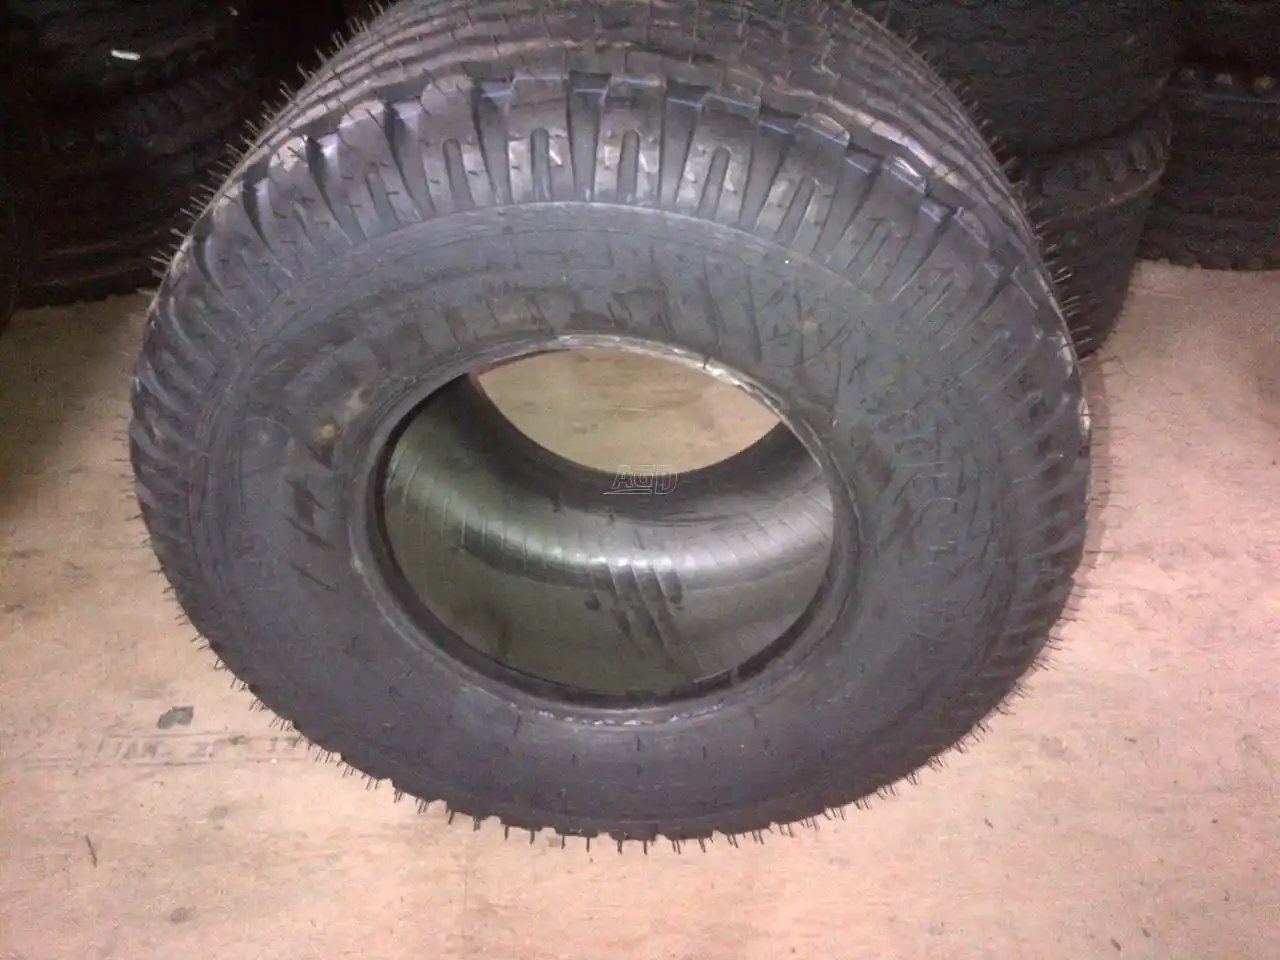  Petlas 500/50 17 tire